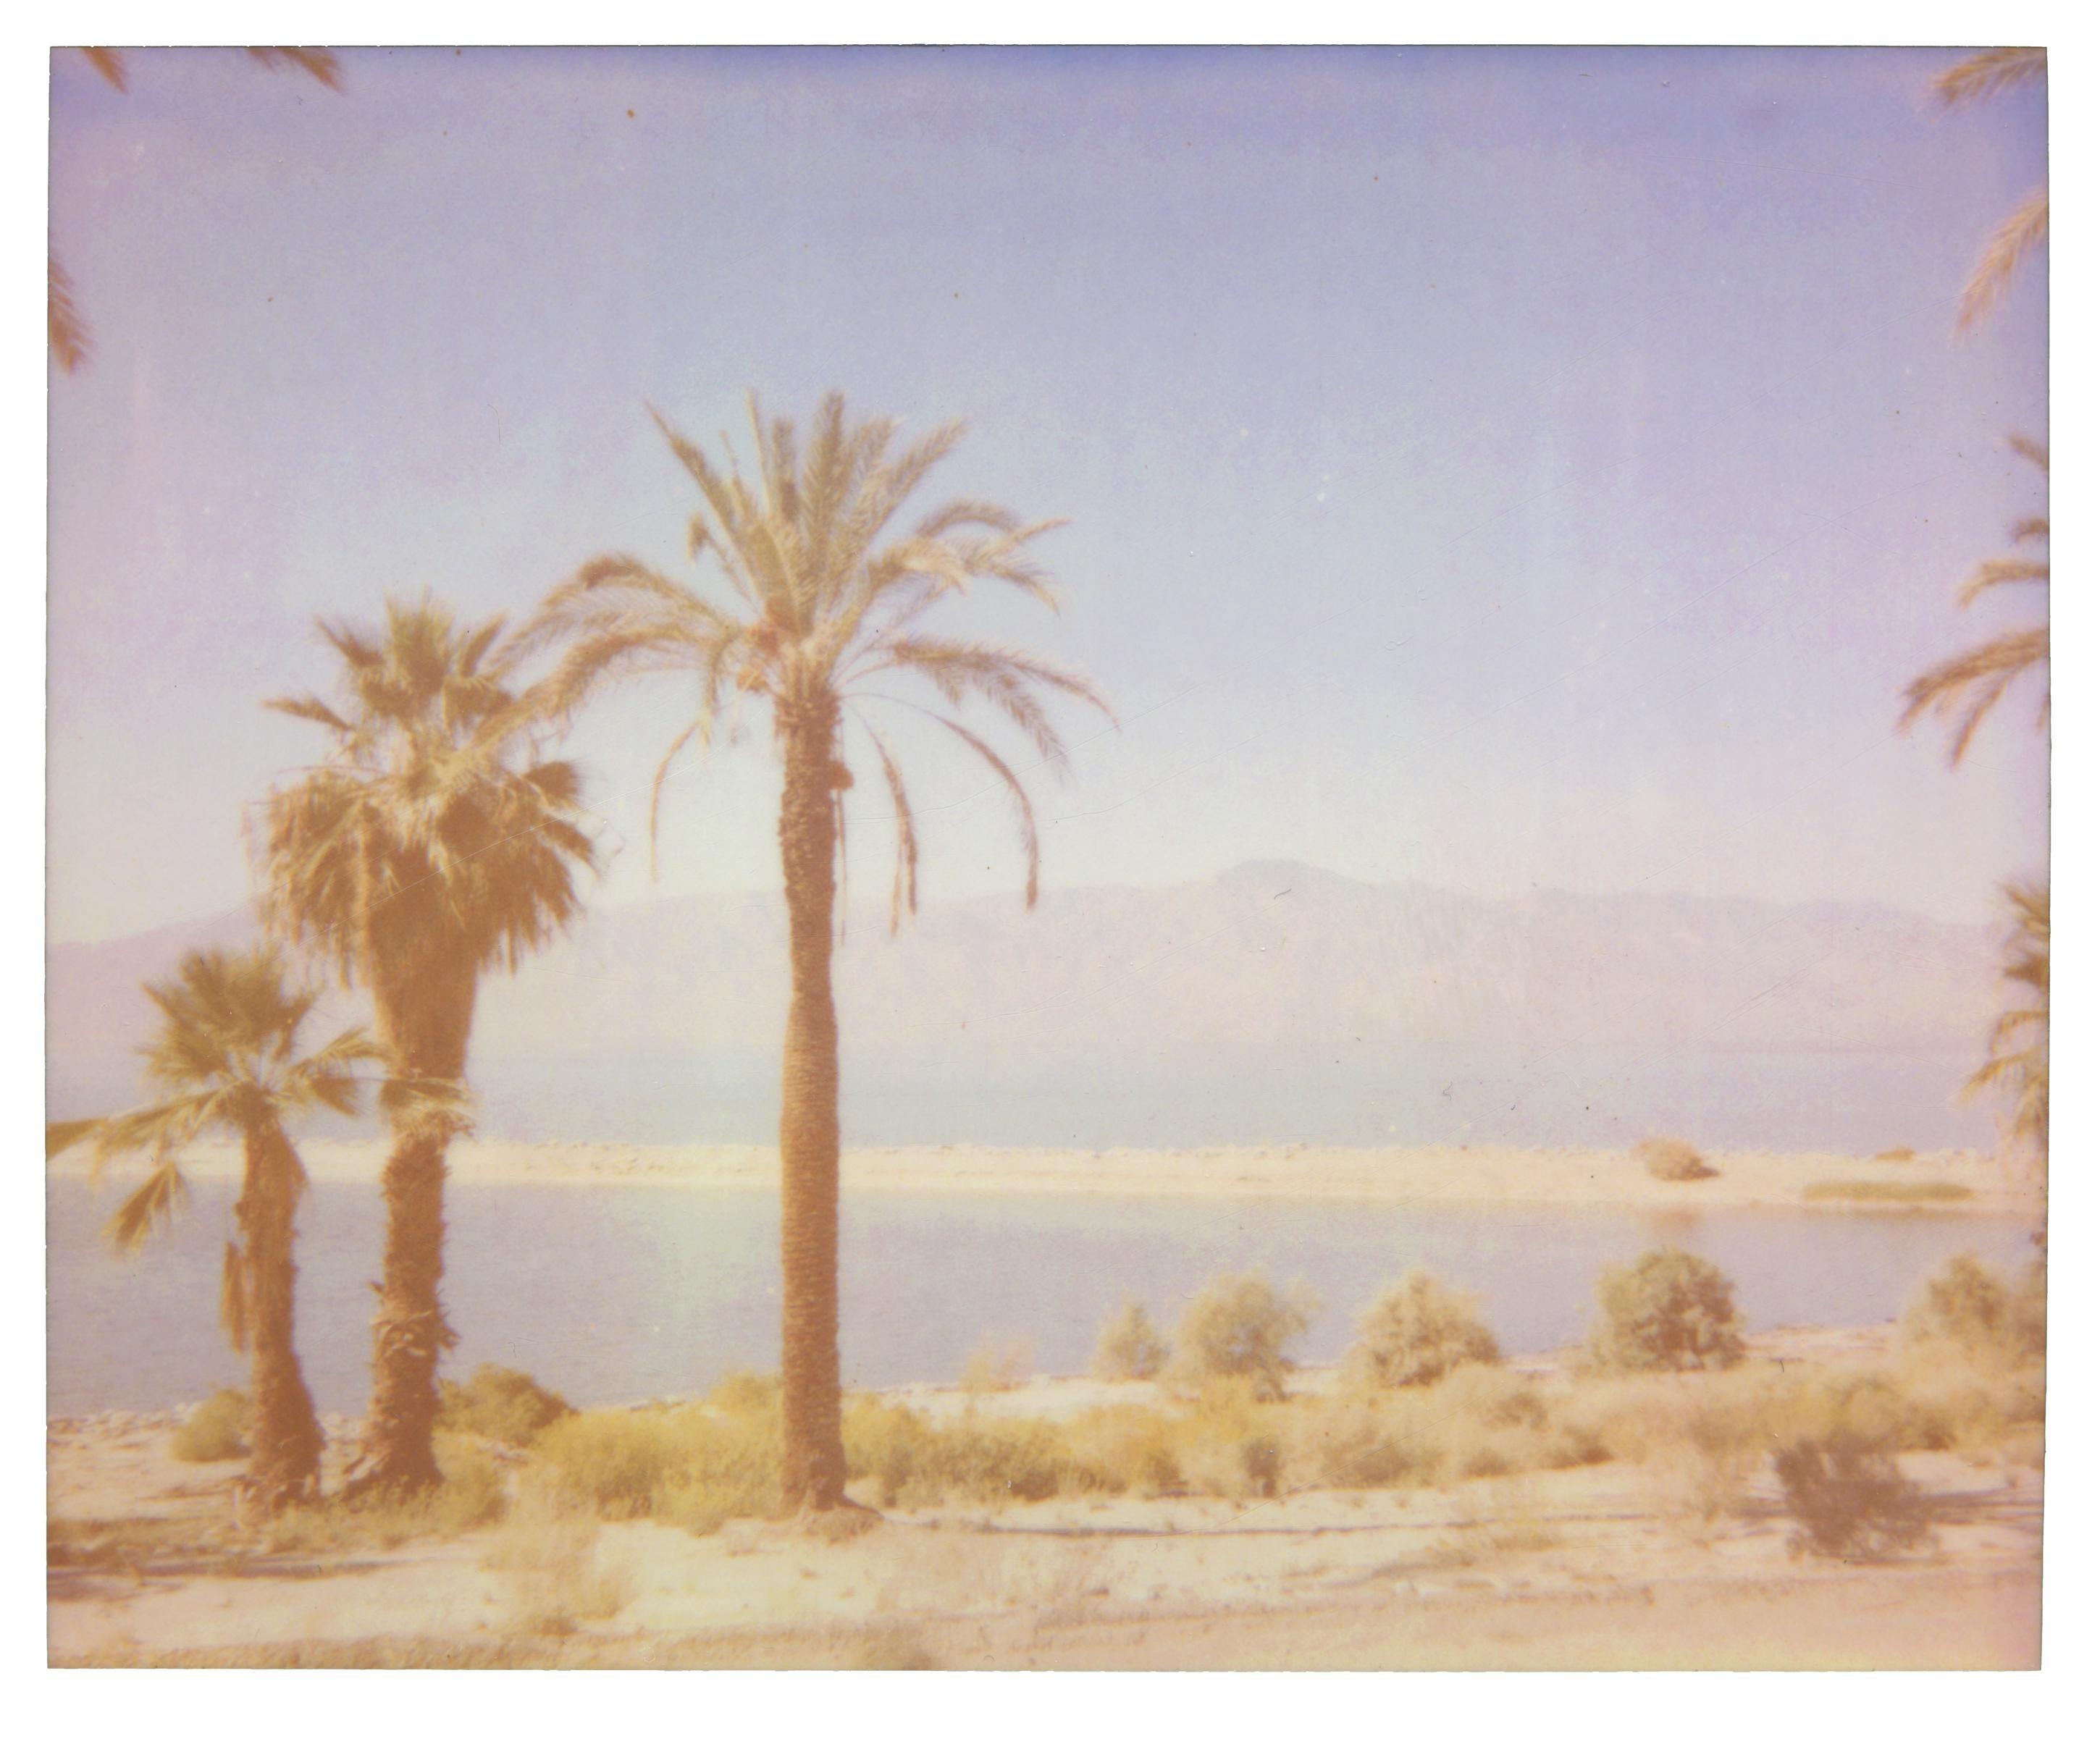 North Shore Mirage (California Badlands) - Contemporary, 21st Century, Polaroid